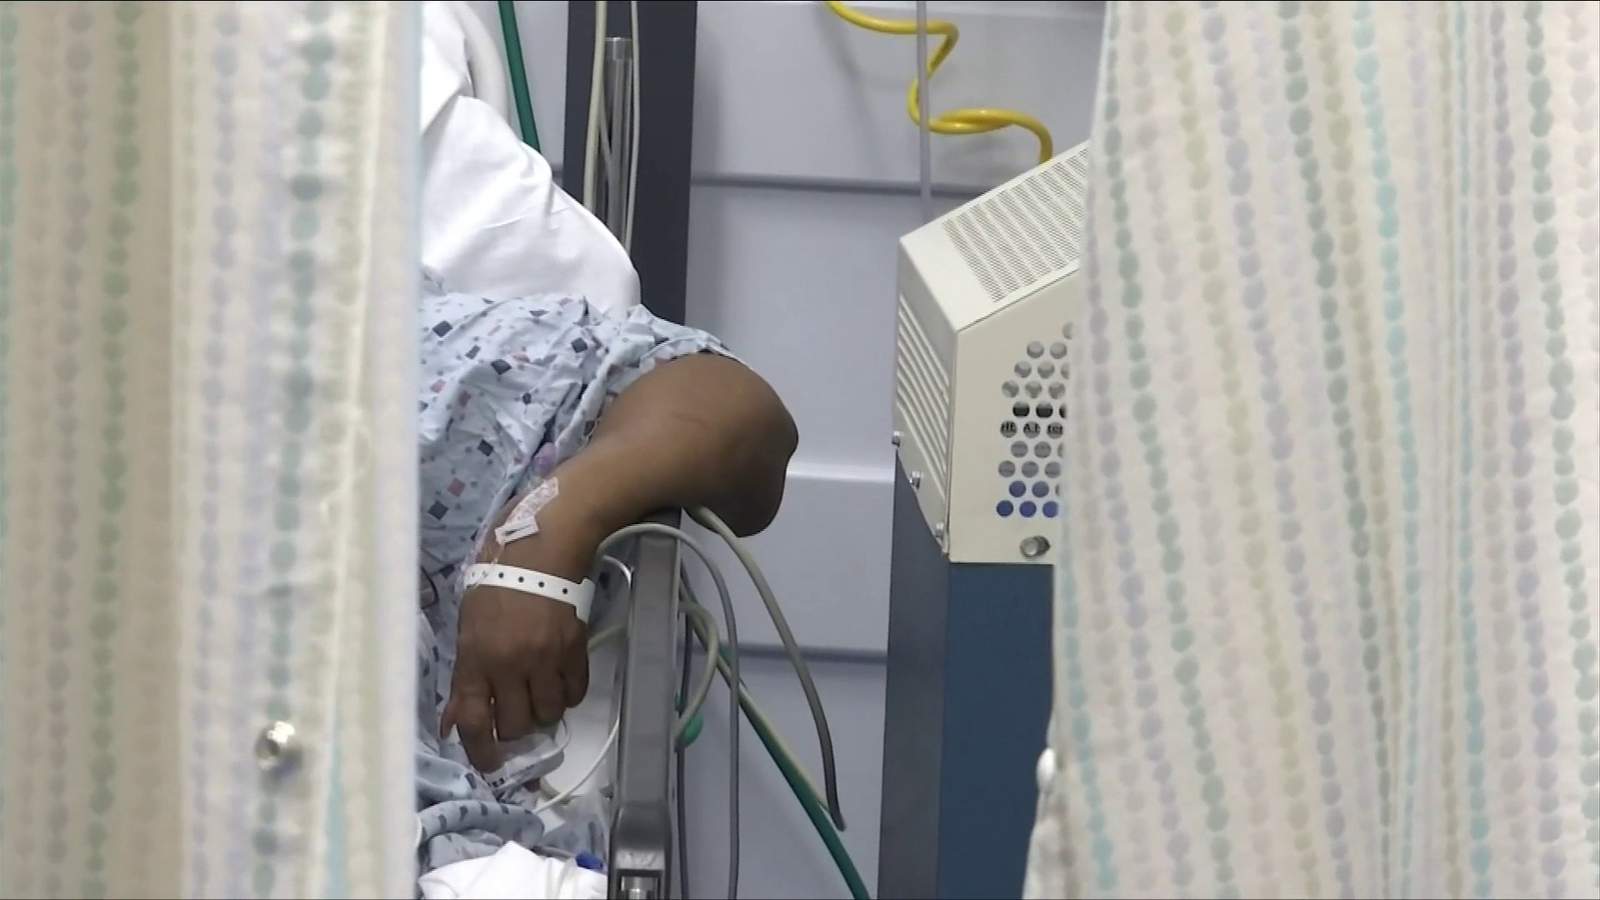 Officials address racial health disparities amid COVID-19 pandemic